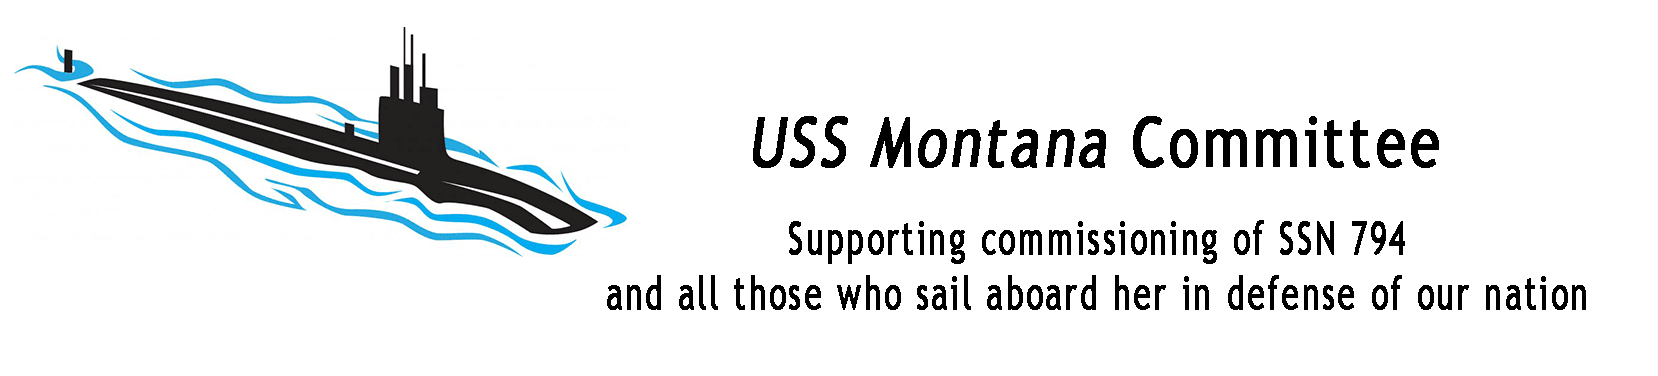 USS Montana Committee